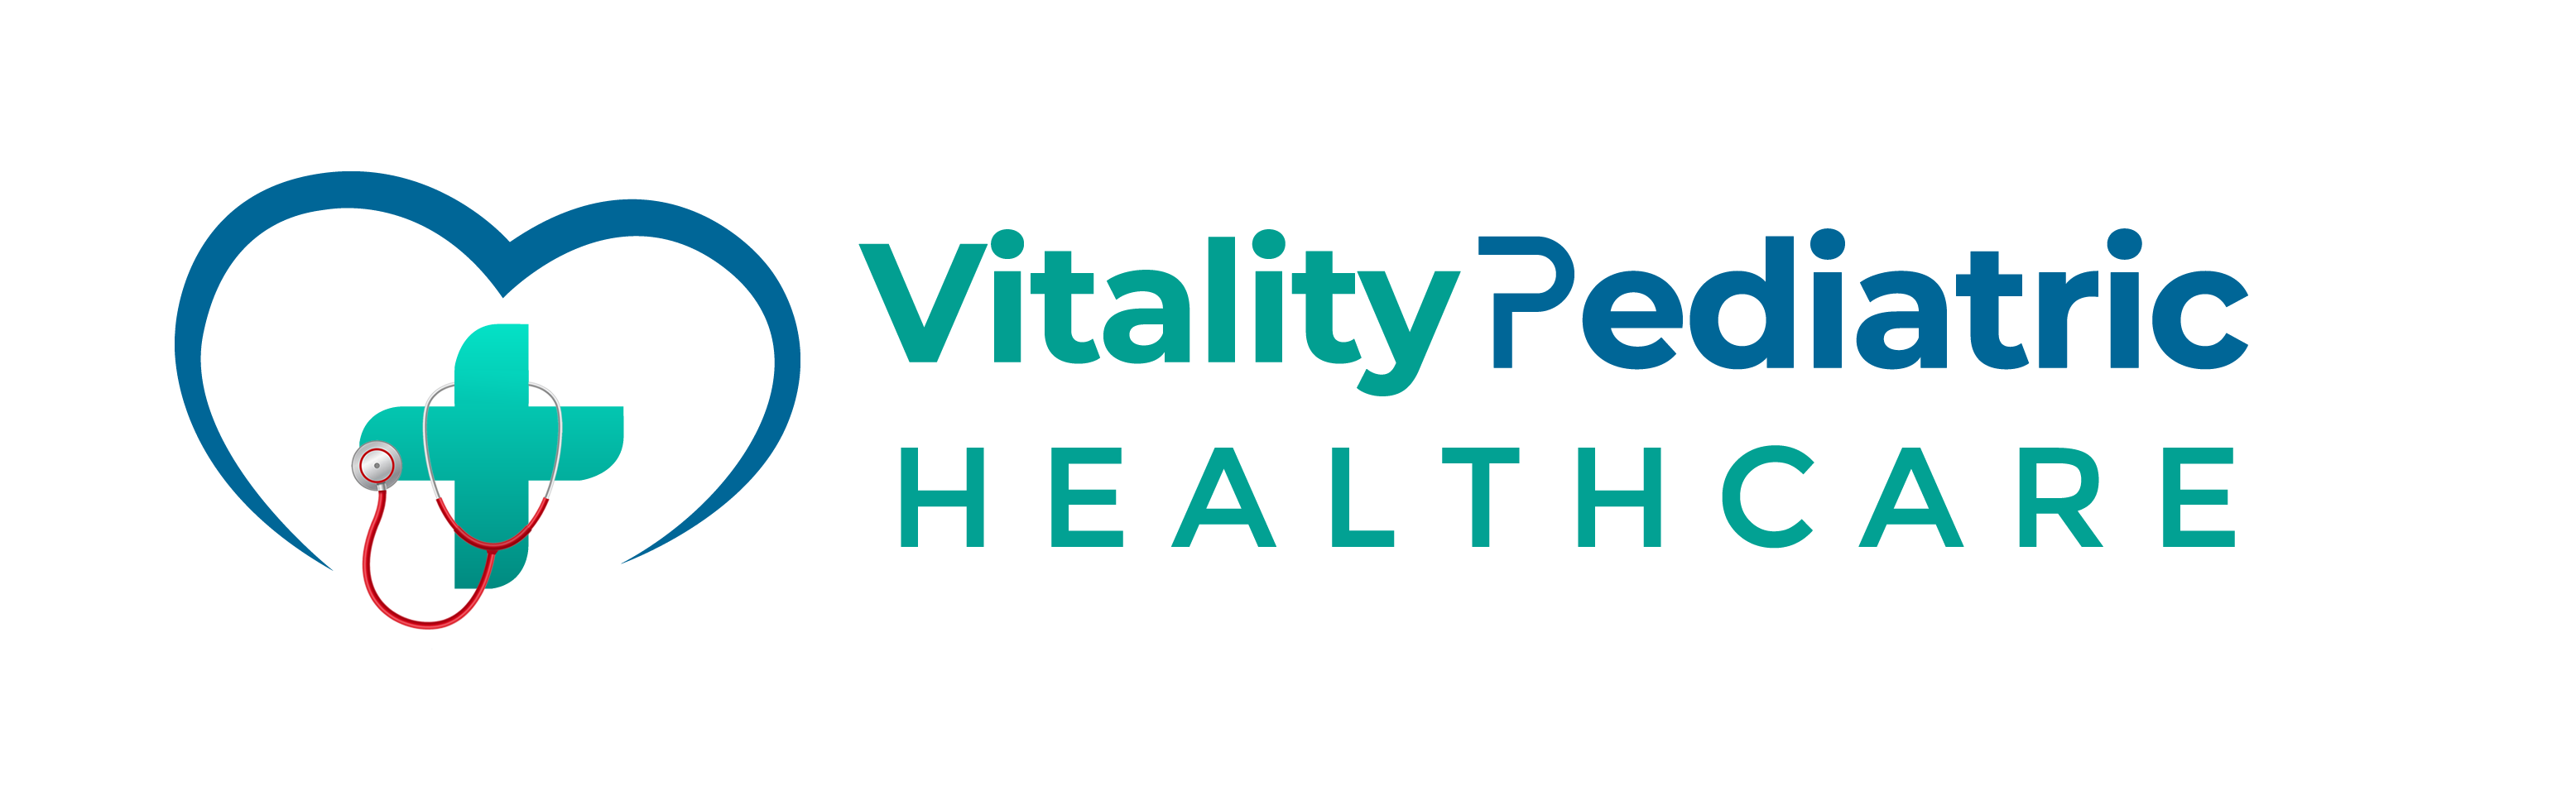 Vitality Pediatric Healthcare